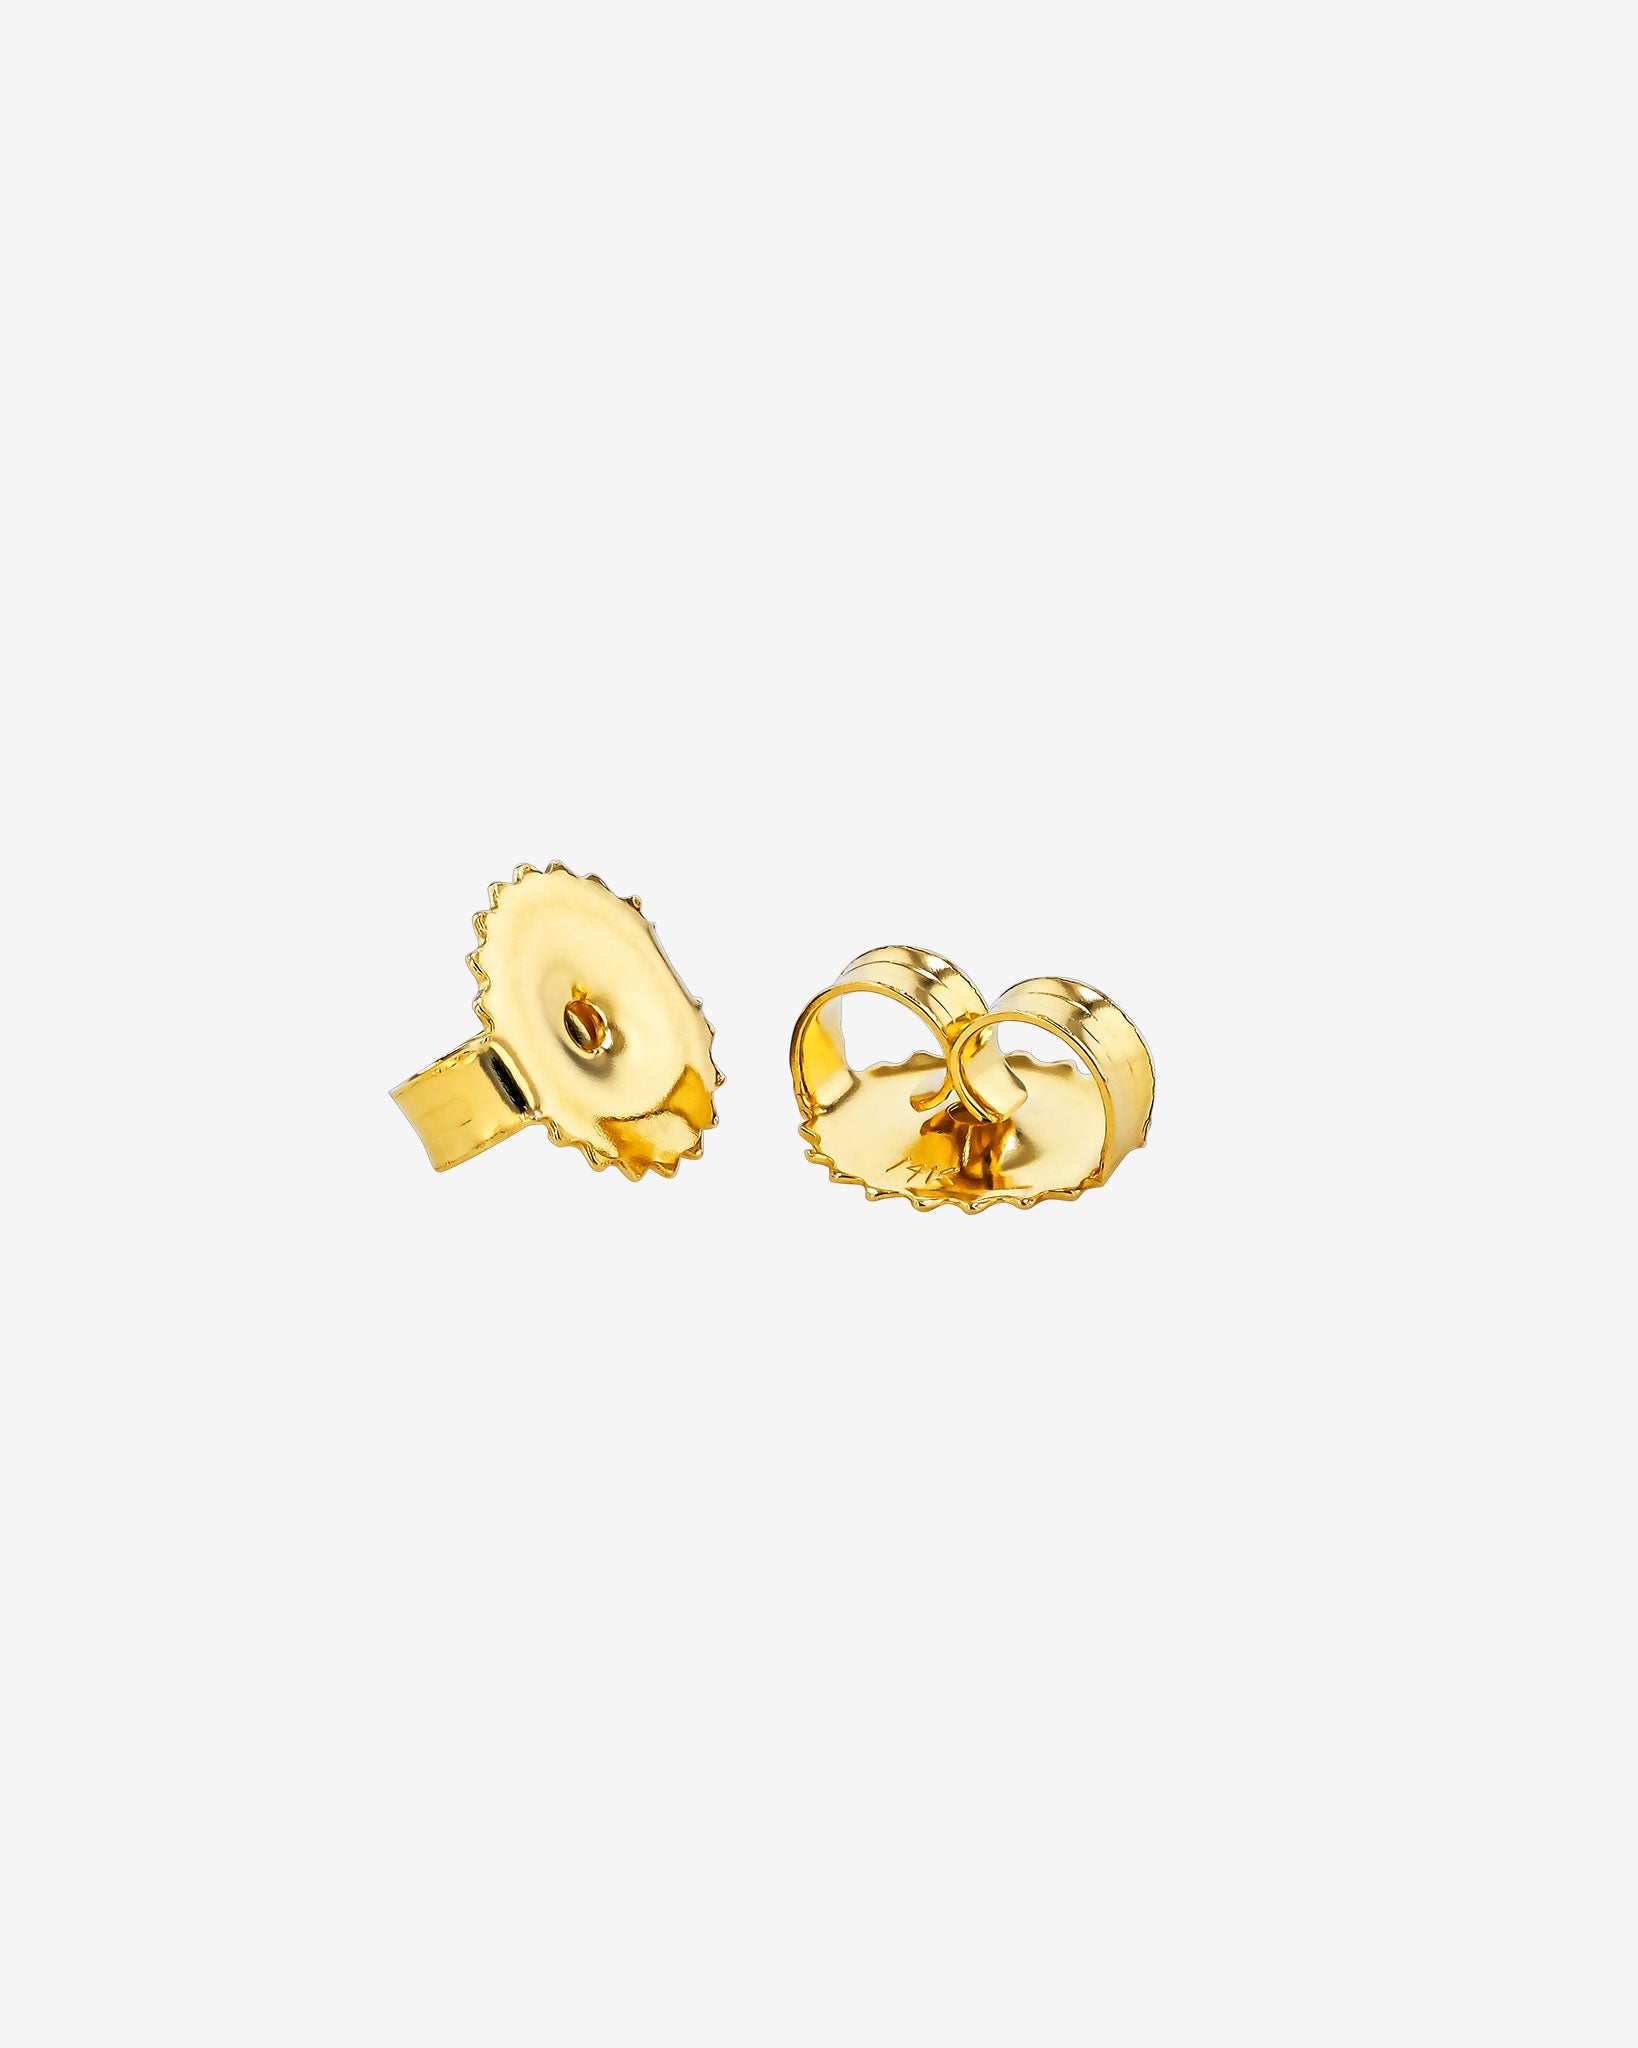 Kalan By Suzanne Kalan 14K Yellow Gold Post Earring Backs